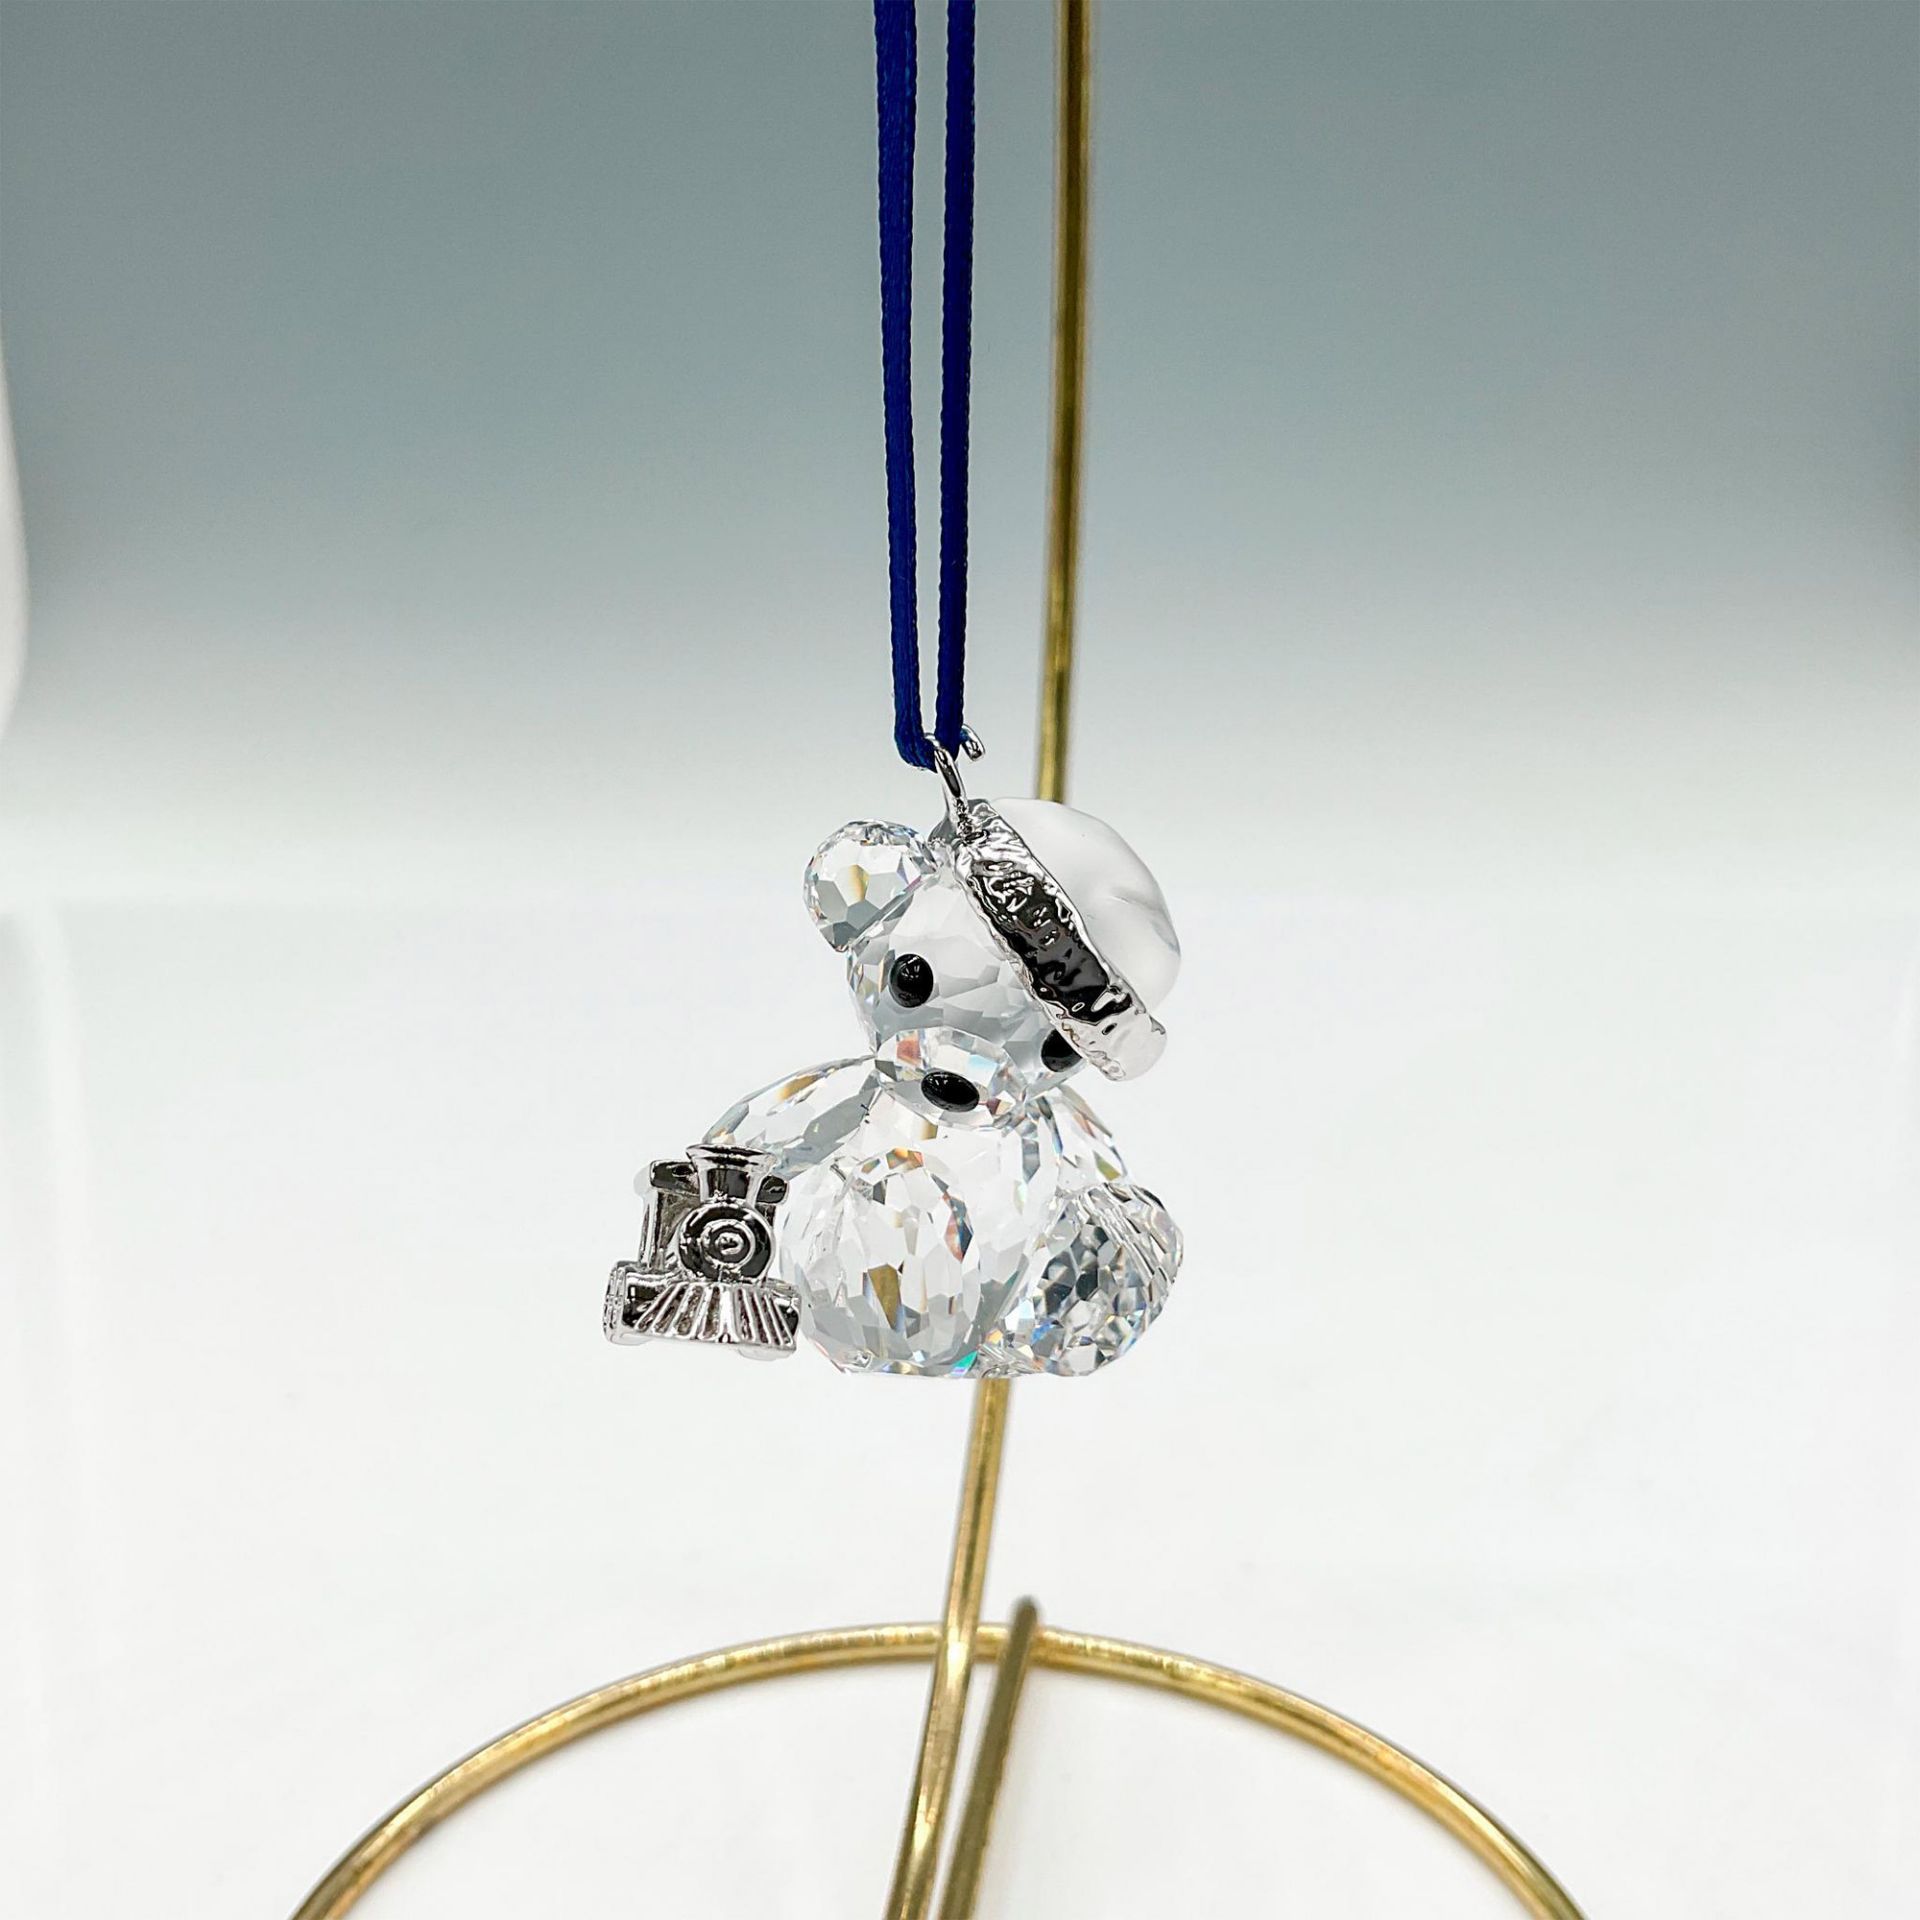 Swarovski Crystal Ornament, Kris Bear with Locomotive - Image 4 of 4